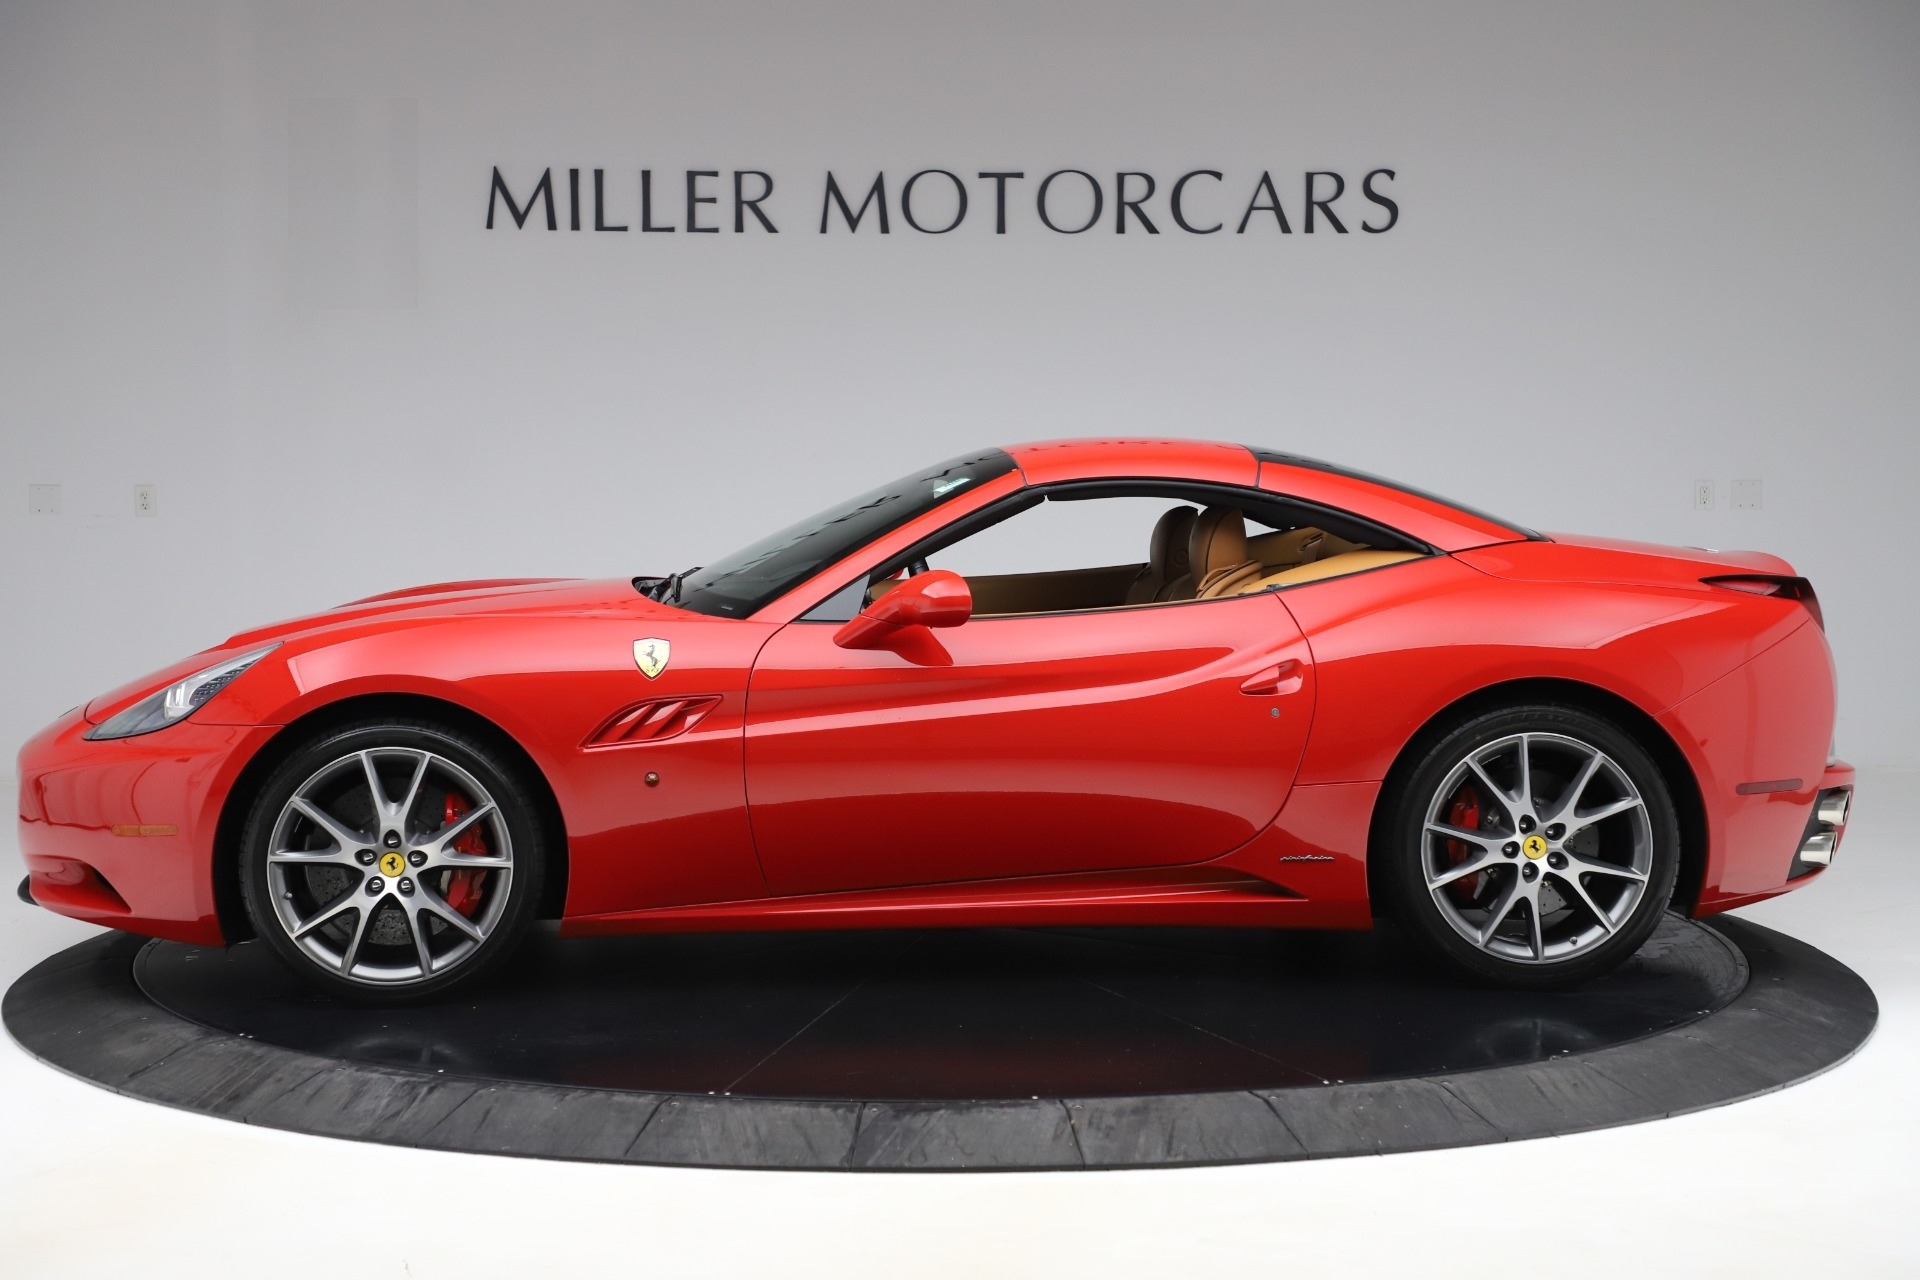 Pre Owned 13 Ferrari California 30 For Sale Miller Motorcars Stock 46a